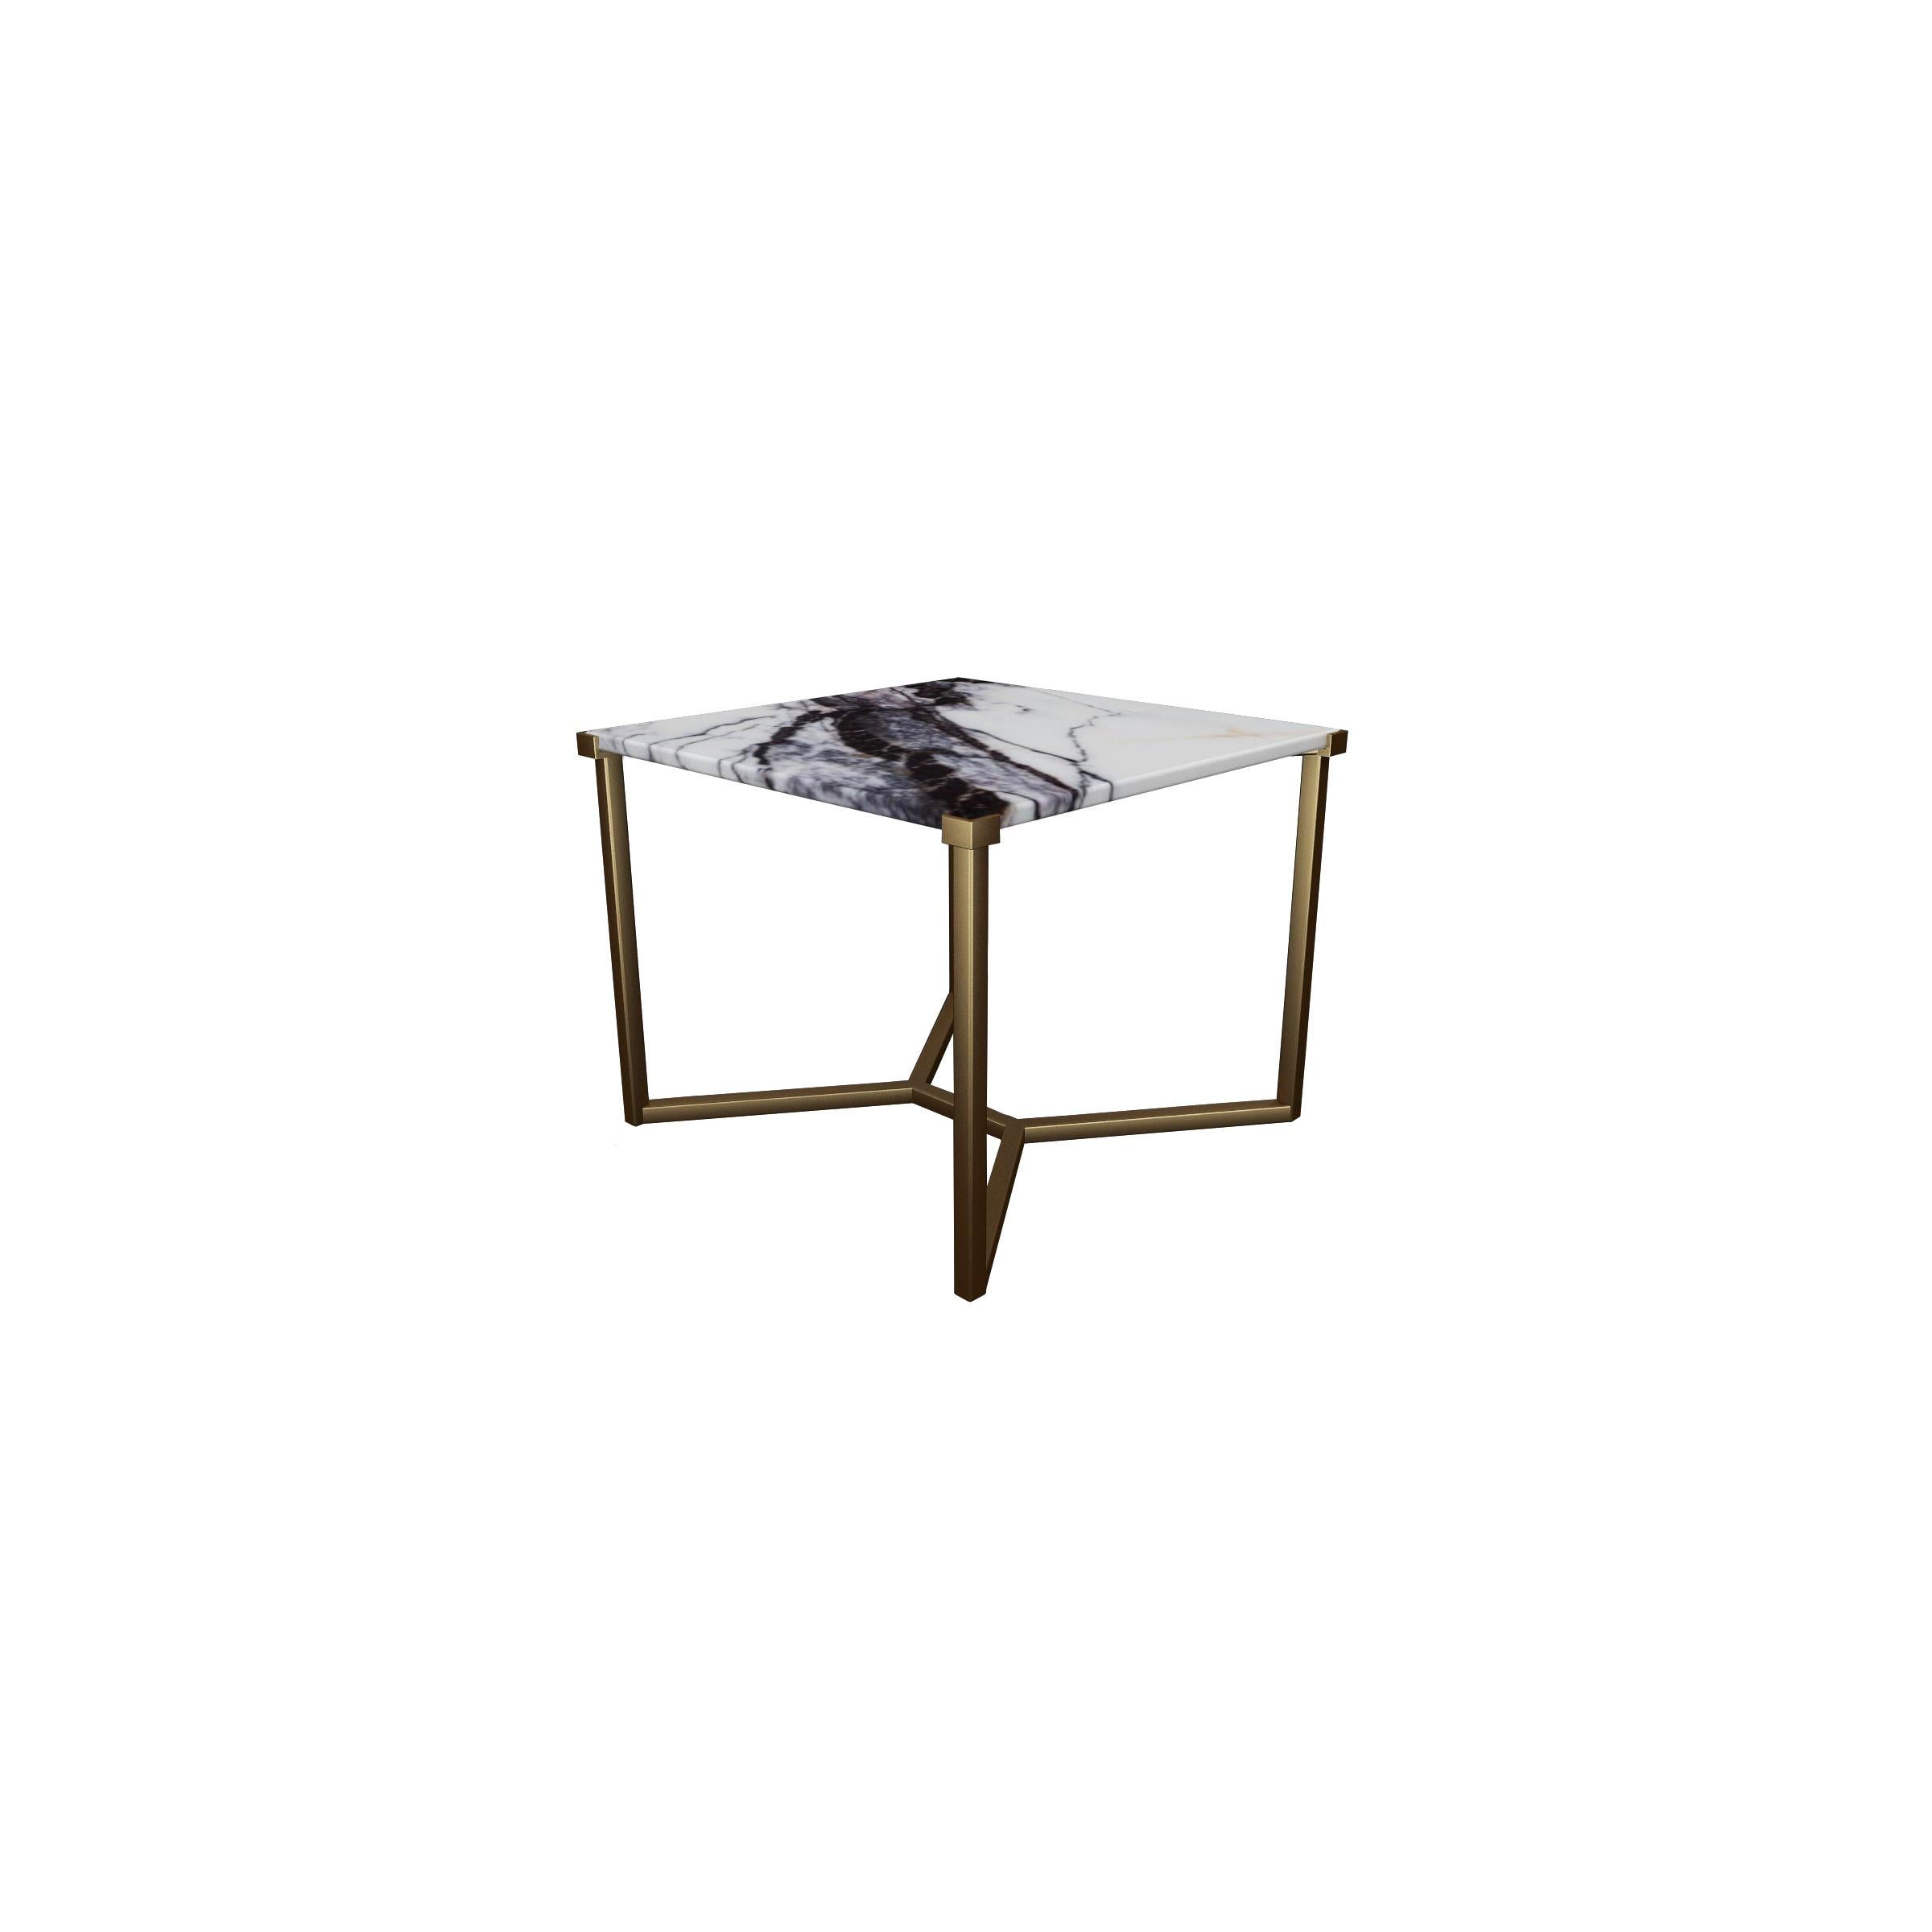 Scandinavian Modern NORDST TEDDY Side Table, Italian Grey Rain Marble, Danish Modern Design, New For Sale